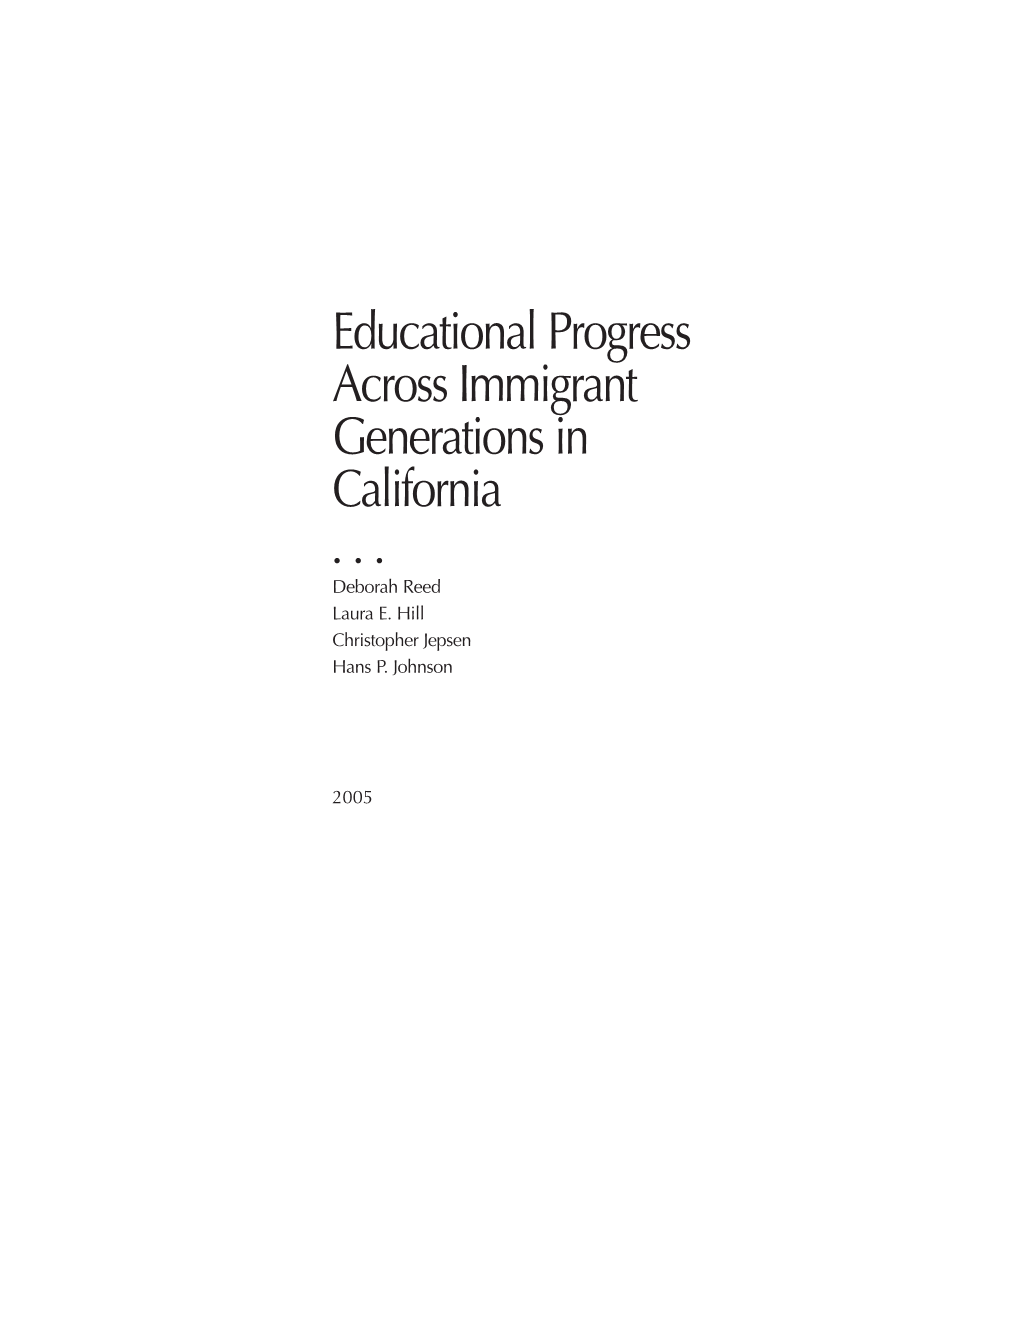 Educational Progress Across Immigrant Generations in California